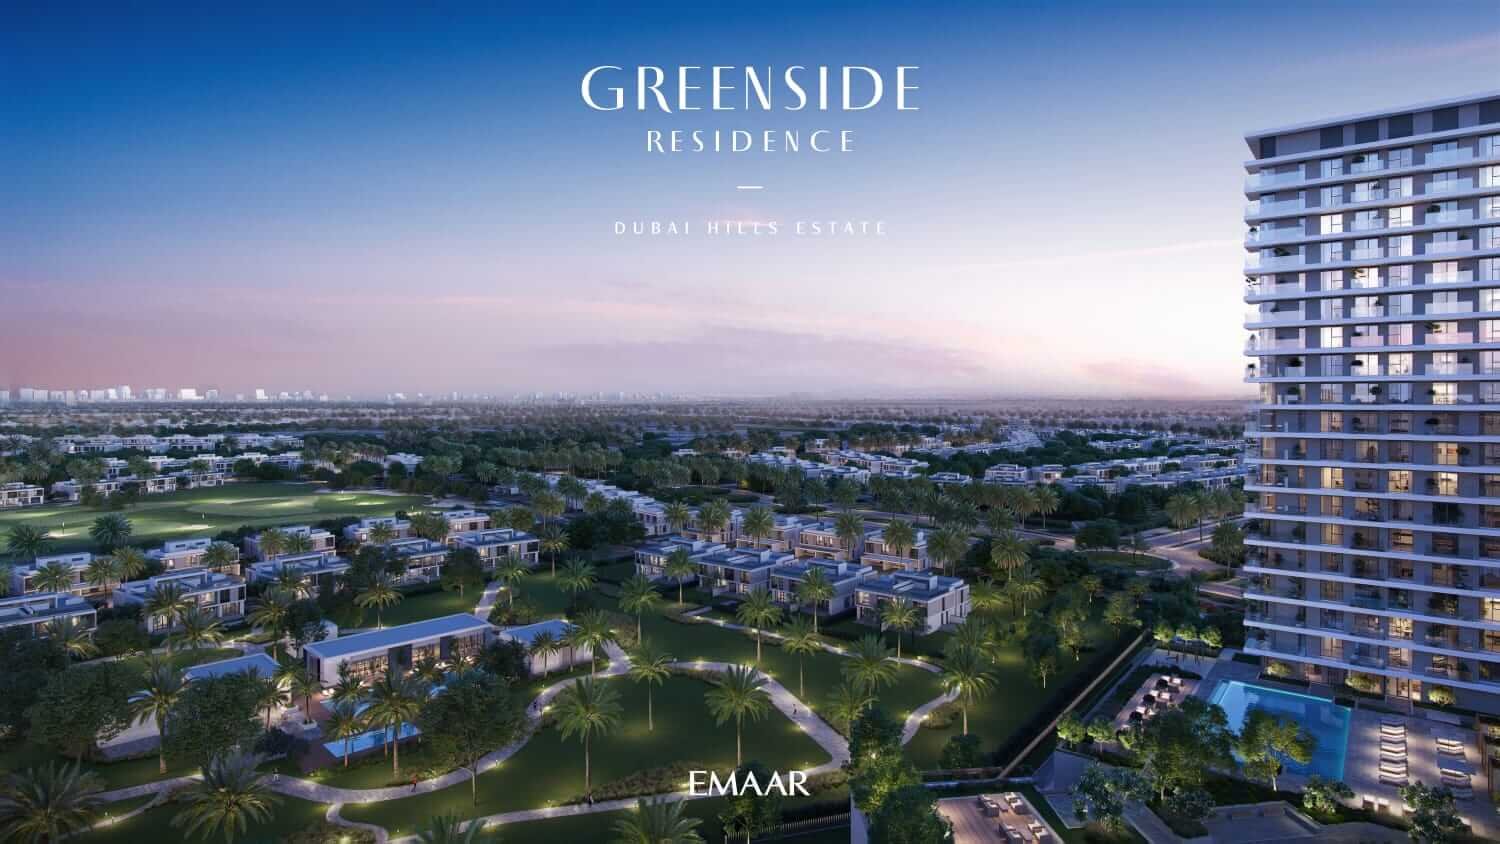 Emaar Greenside Residence